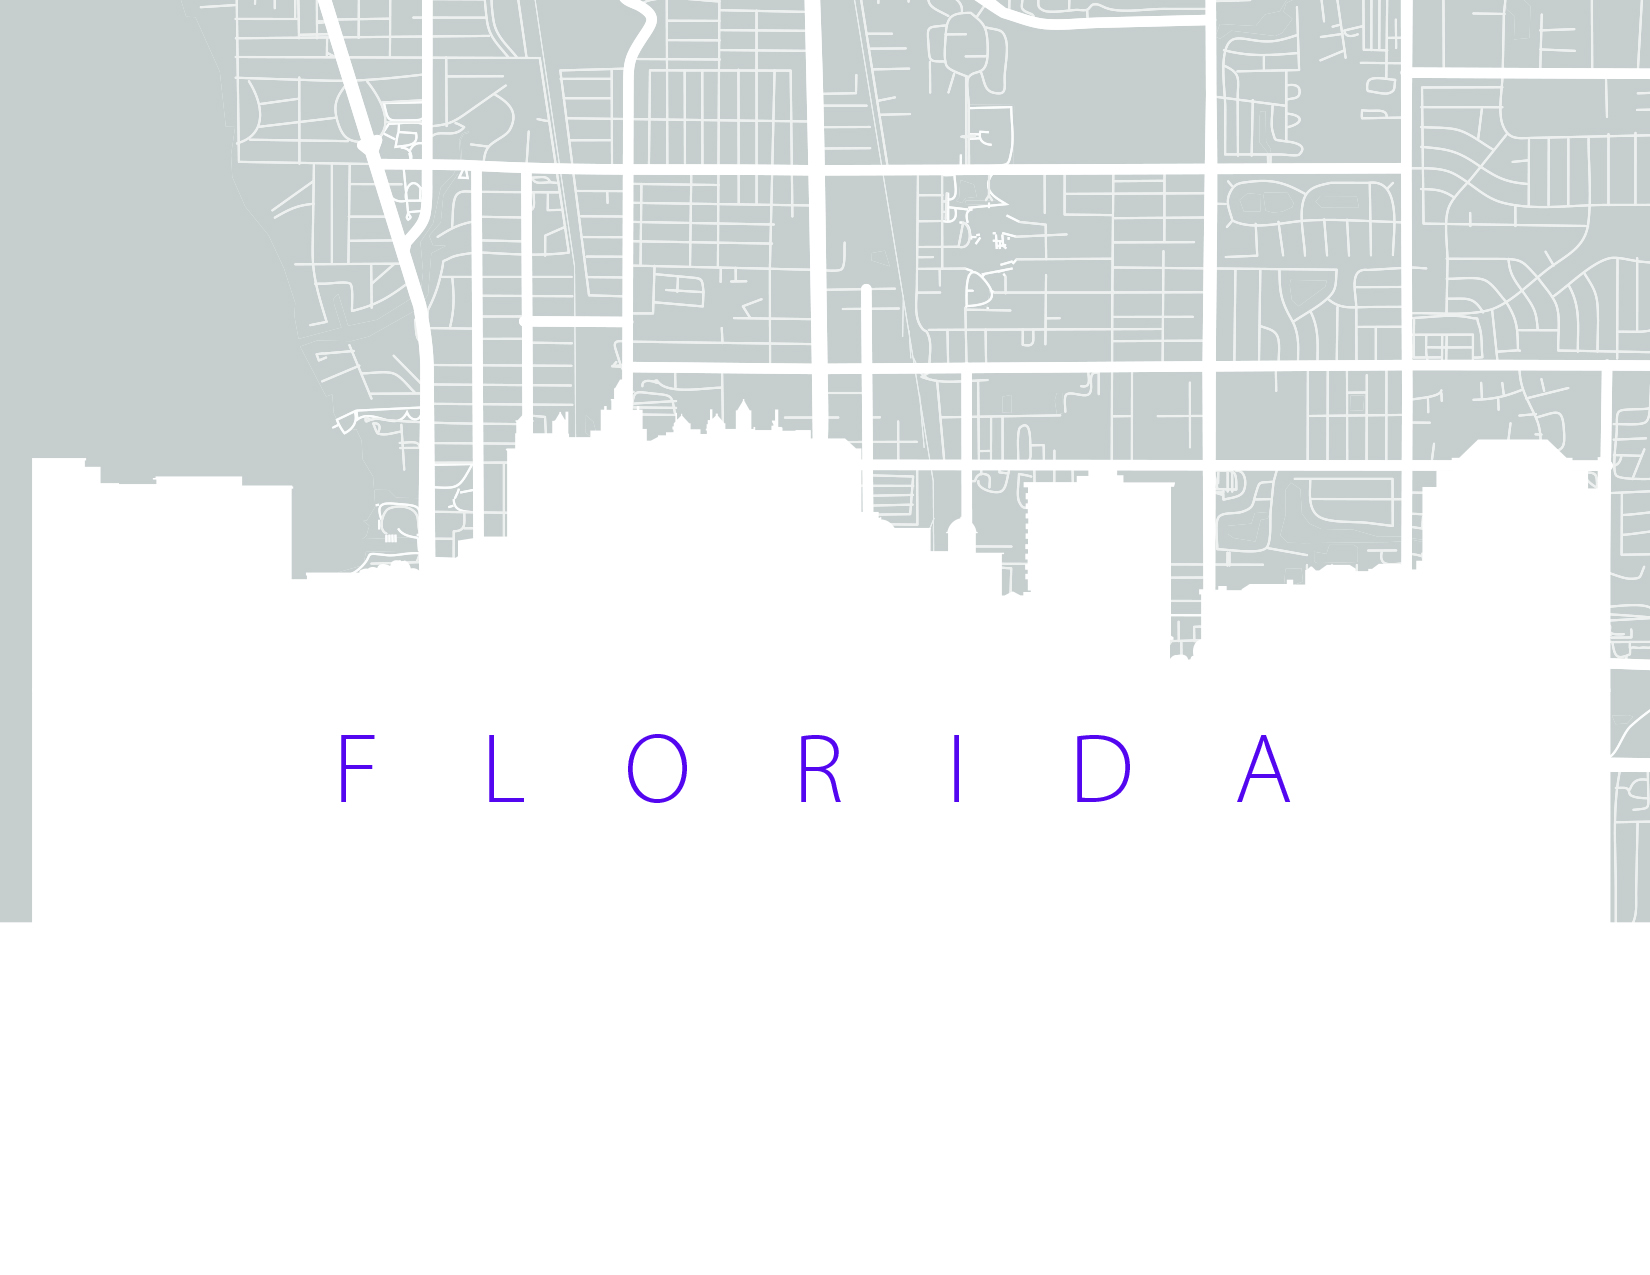 Map and Skyline of Florida